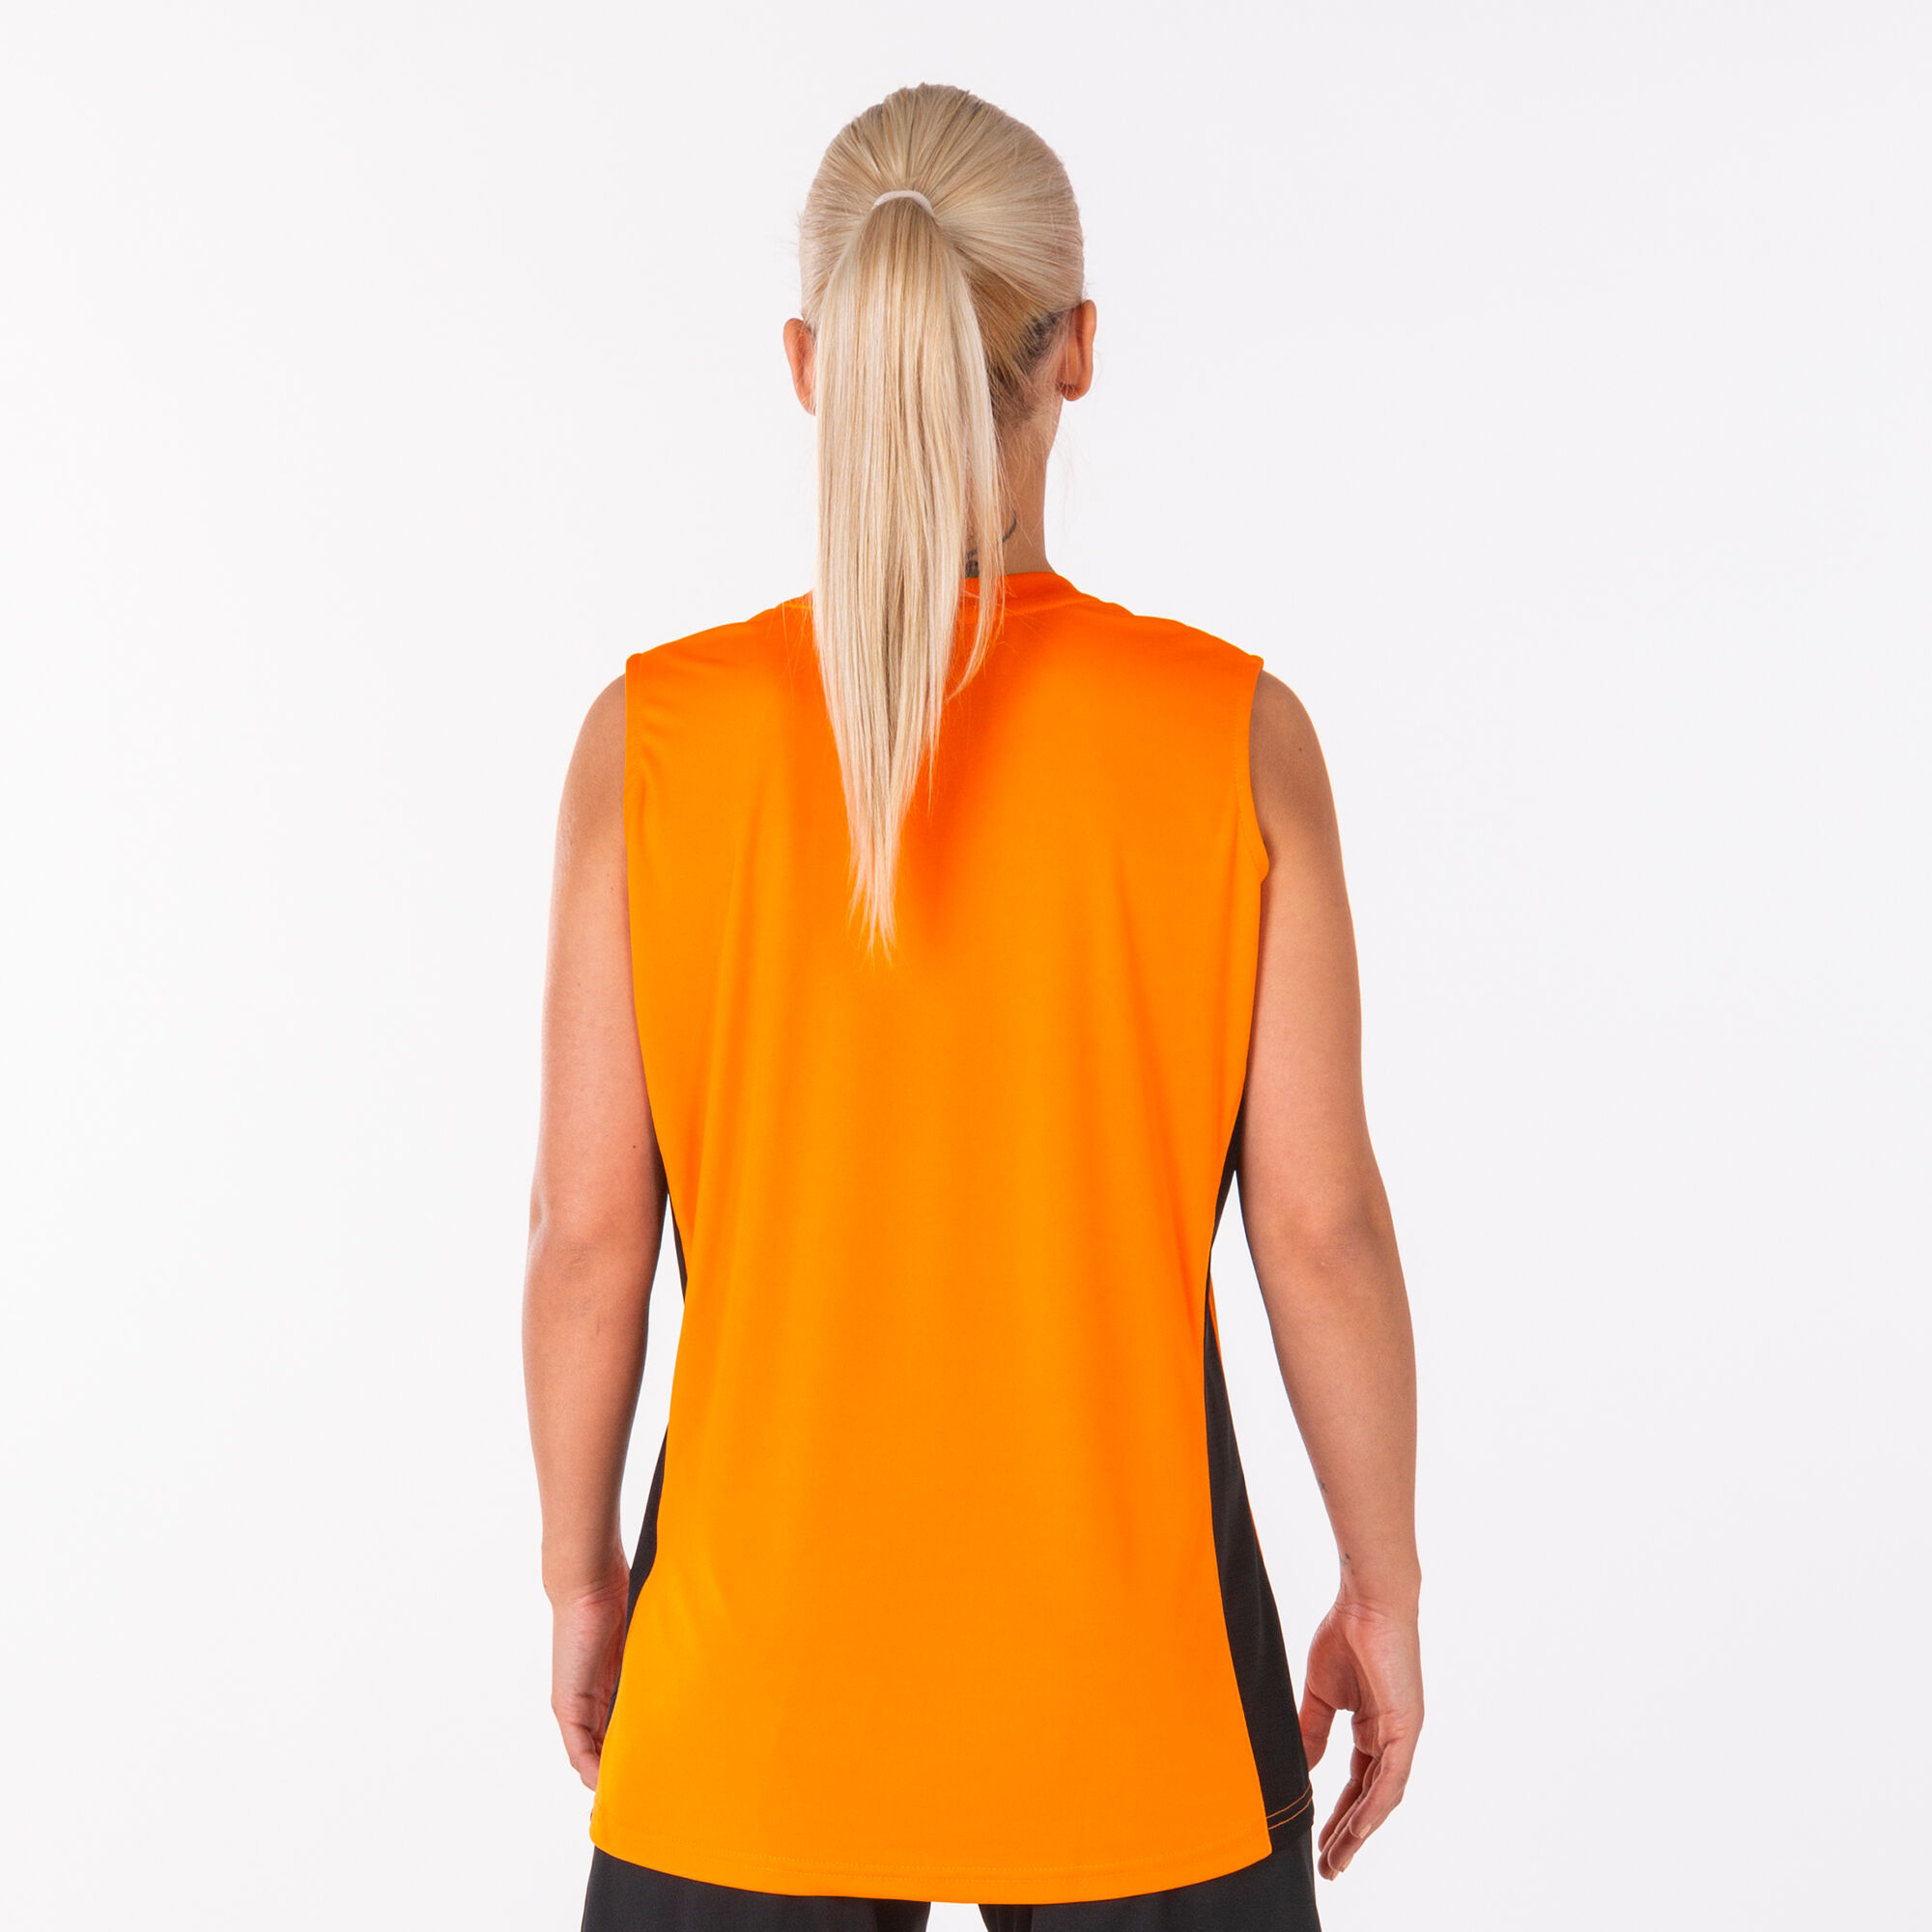 Sleeveless t-shirt woman Cancha III orange black